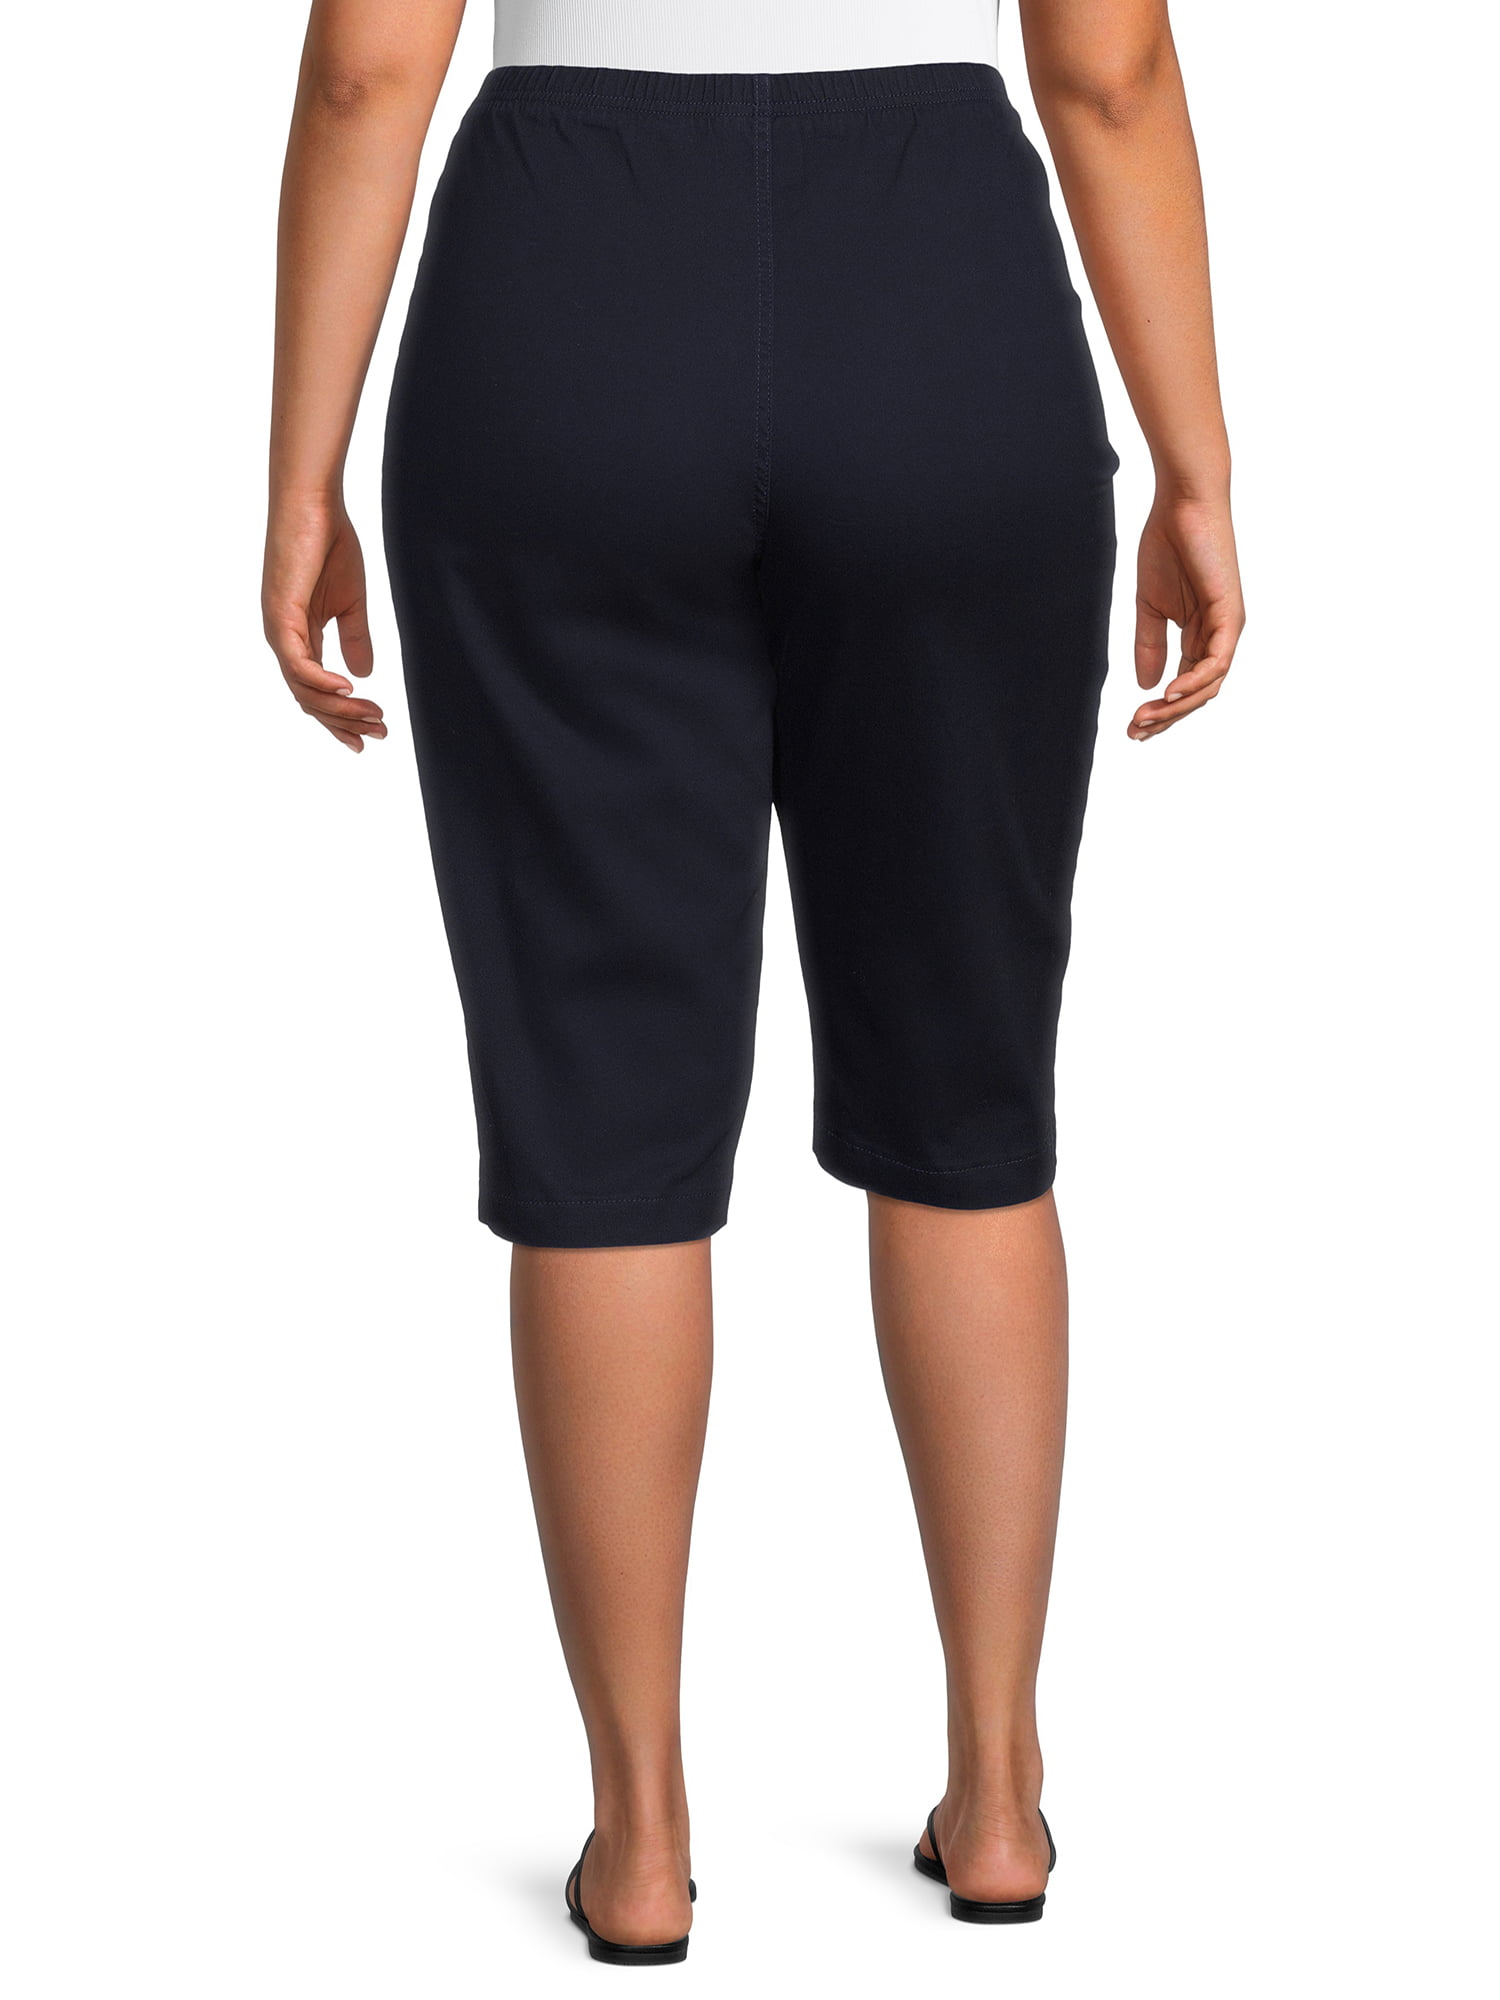 Just My Size Women's Plus Bling Tab Stretch Capri Pants